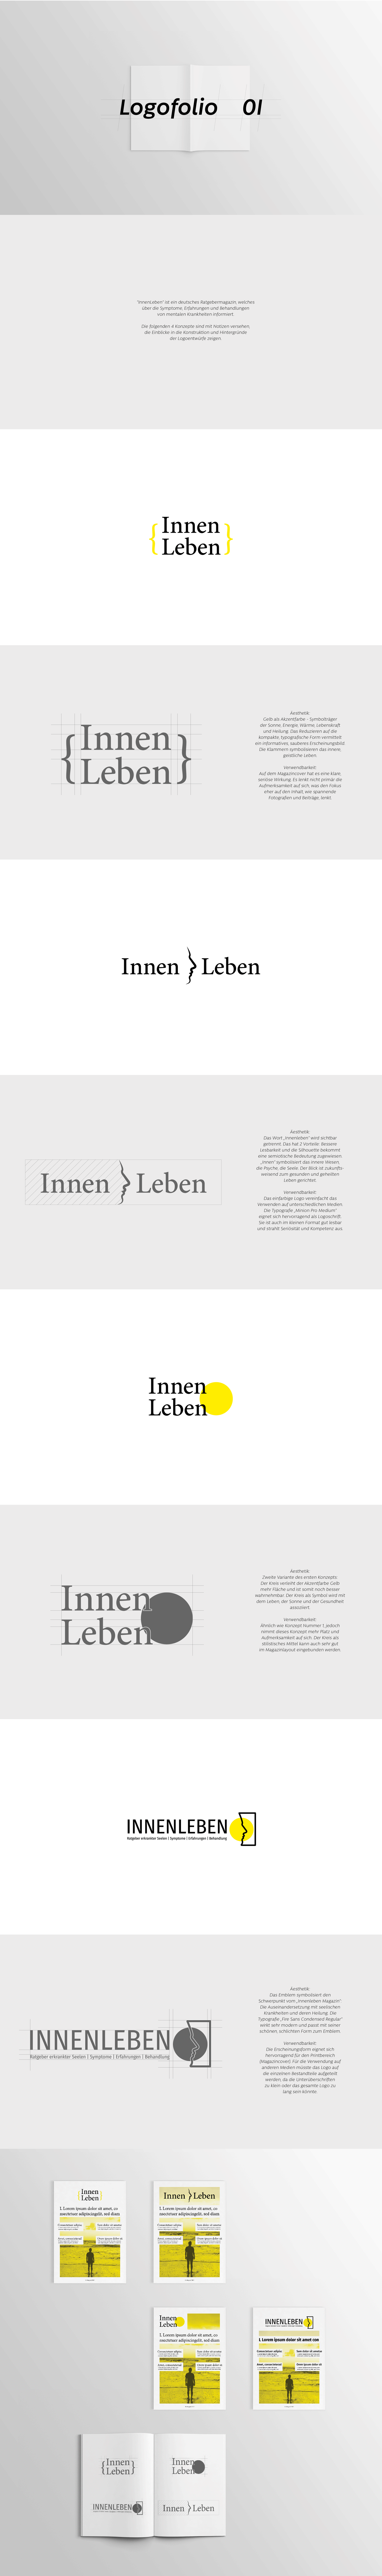 Logofolio-01-InnenLeben-Slawik-Design